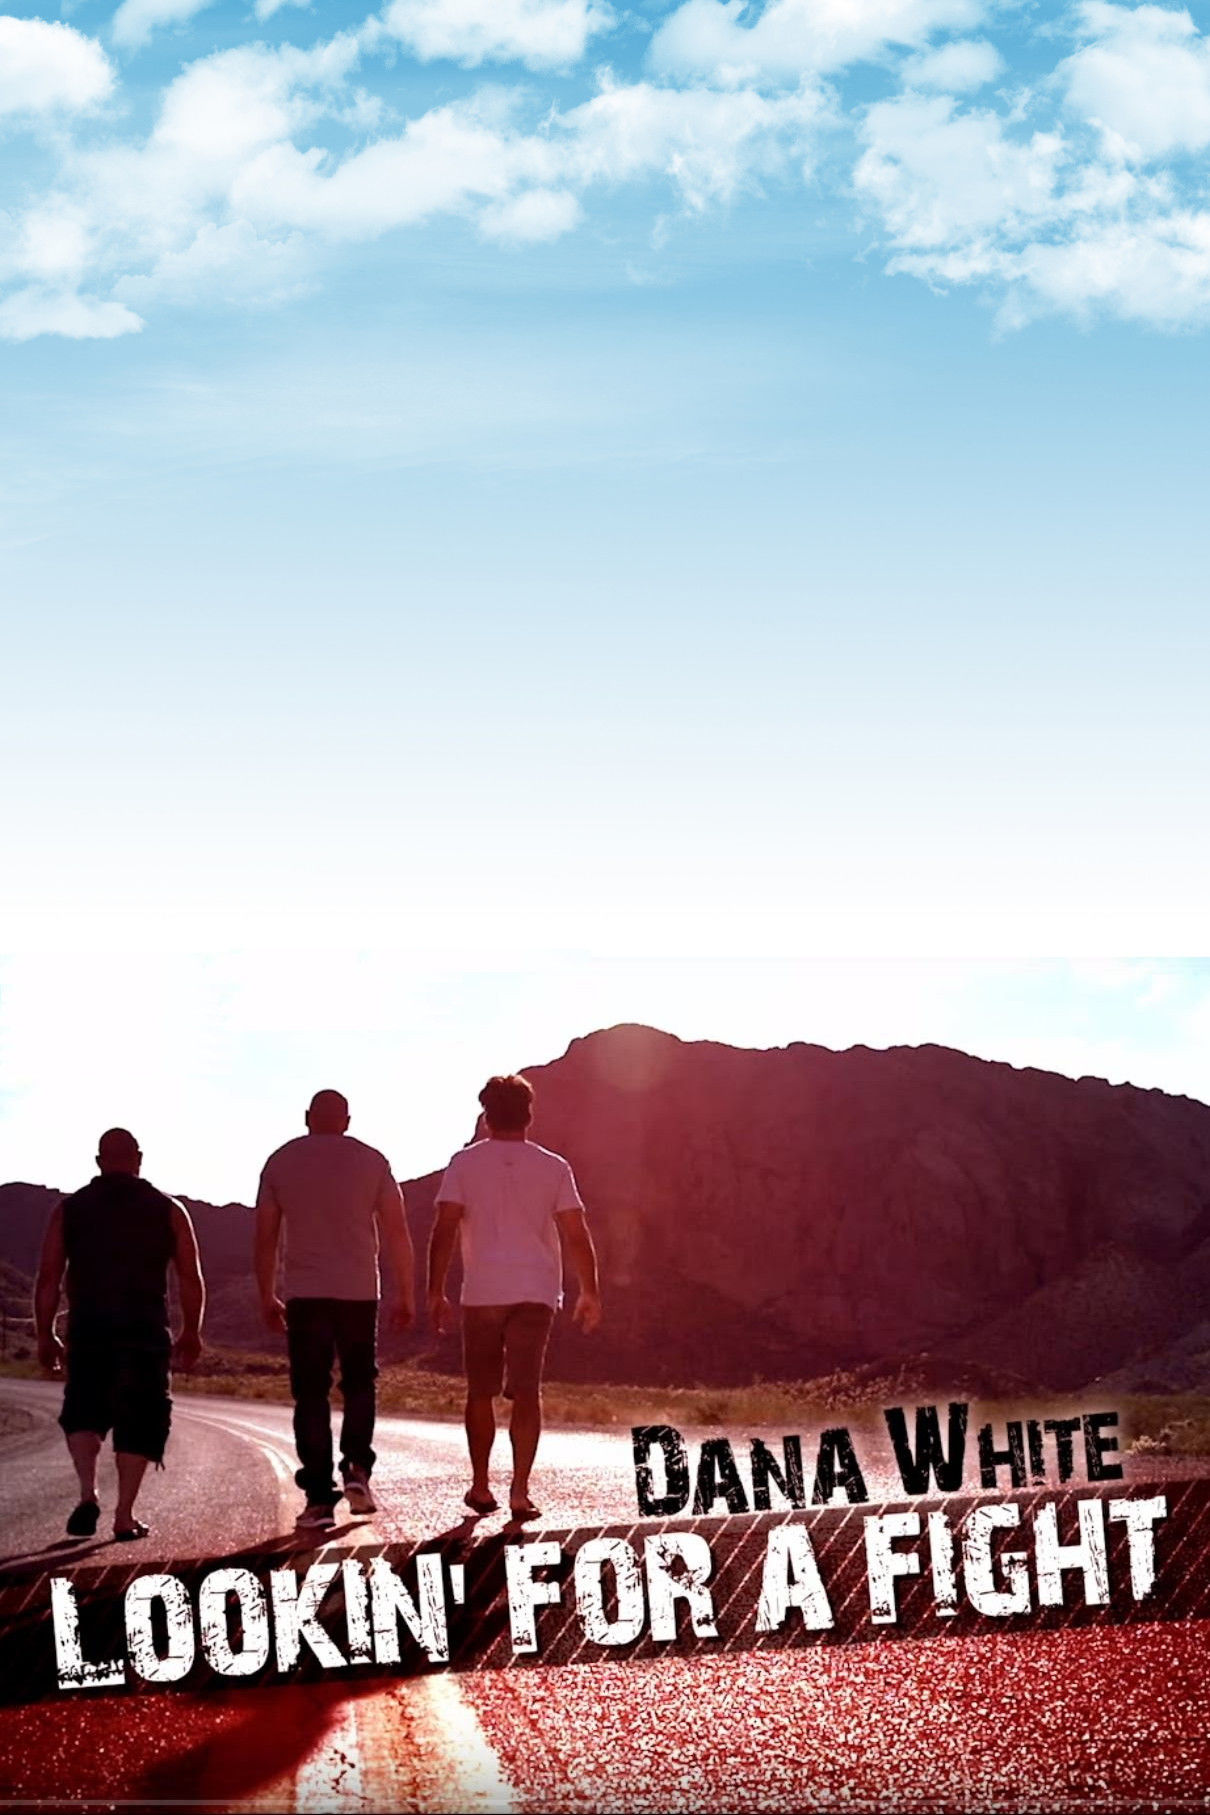 Dana White: Lookin' for a Fight ne zaman